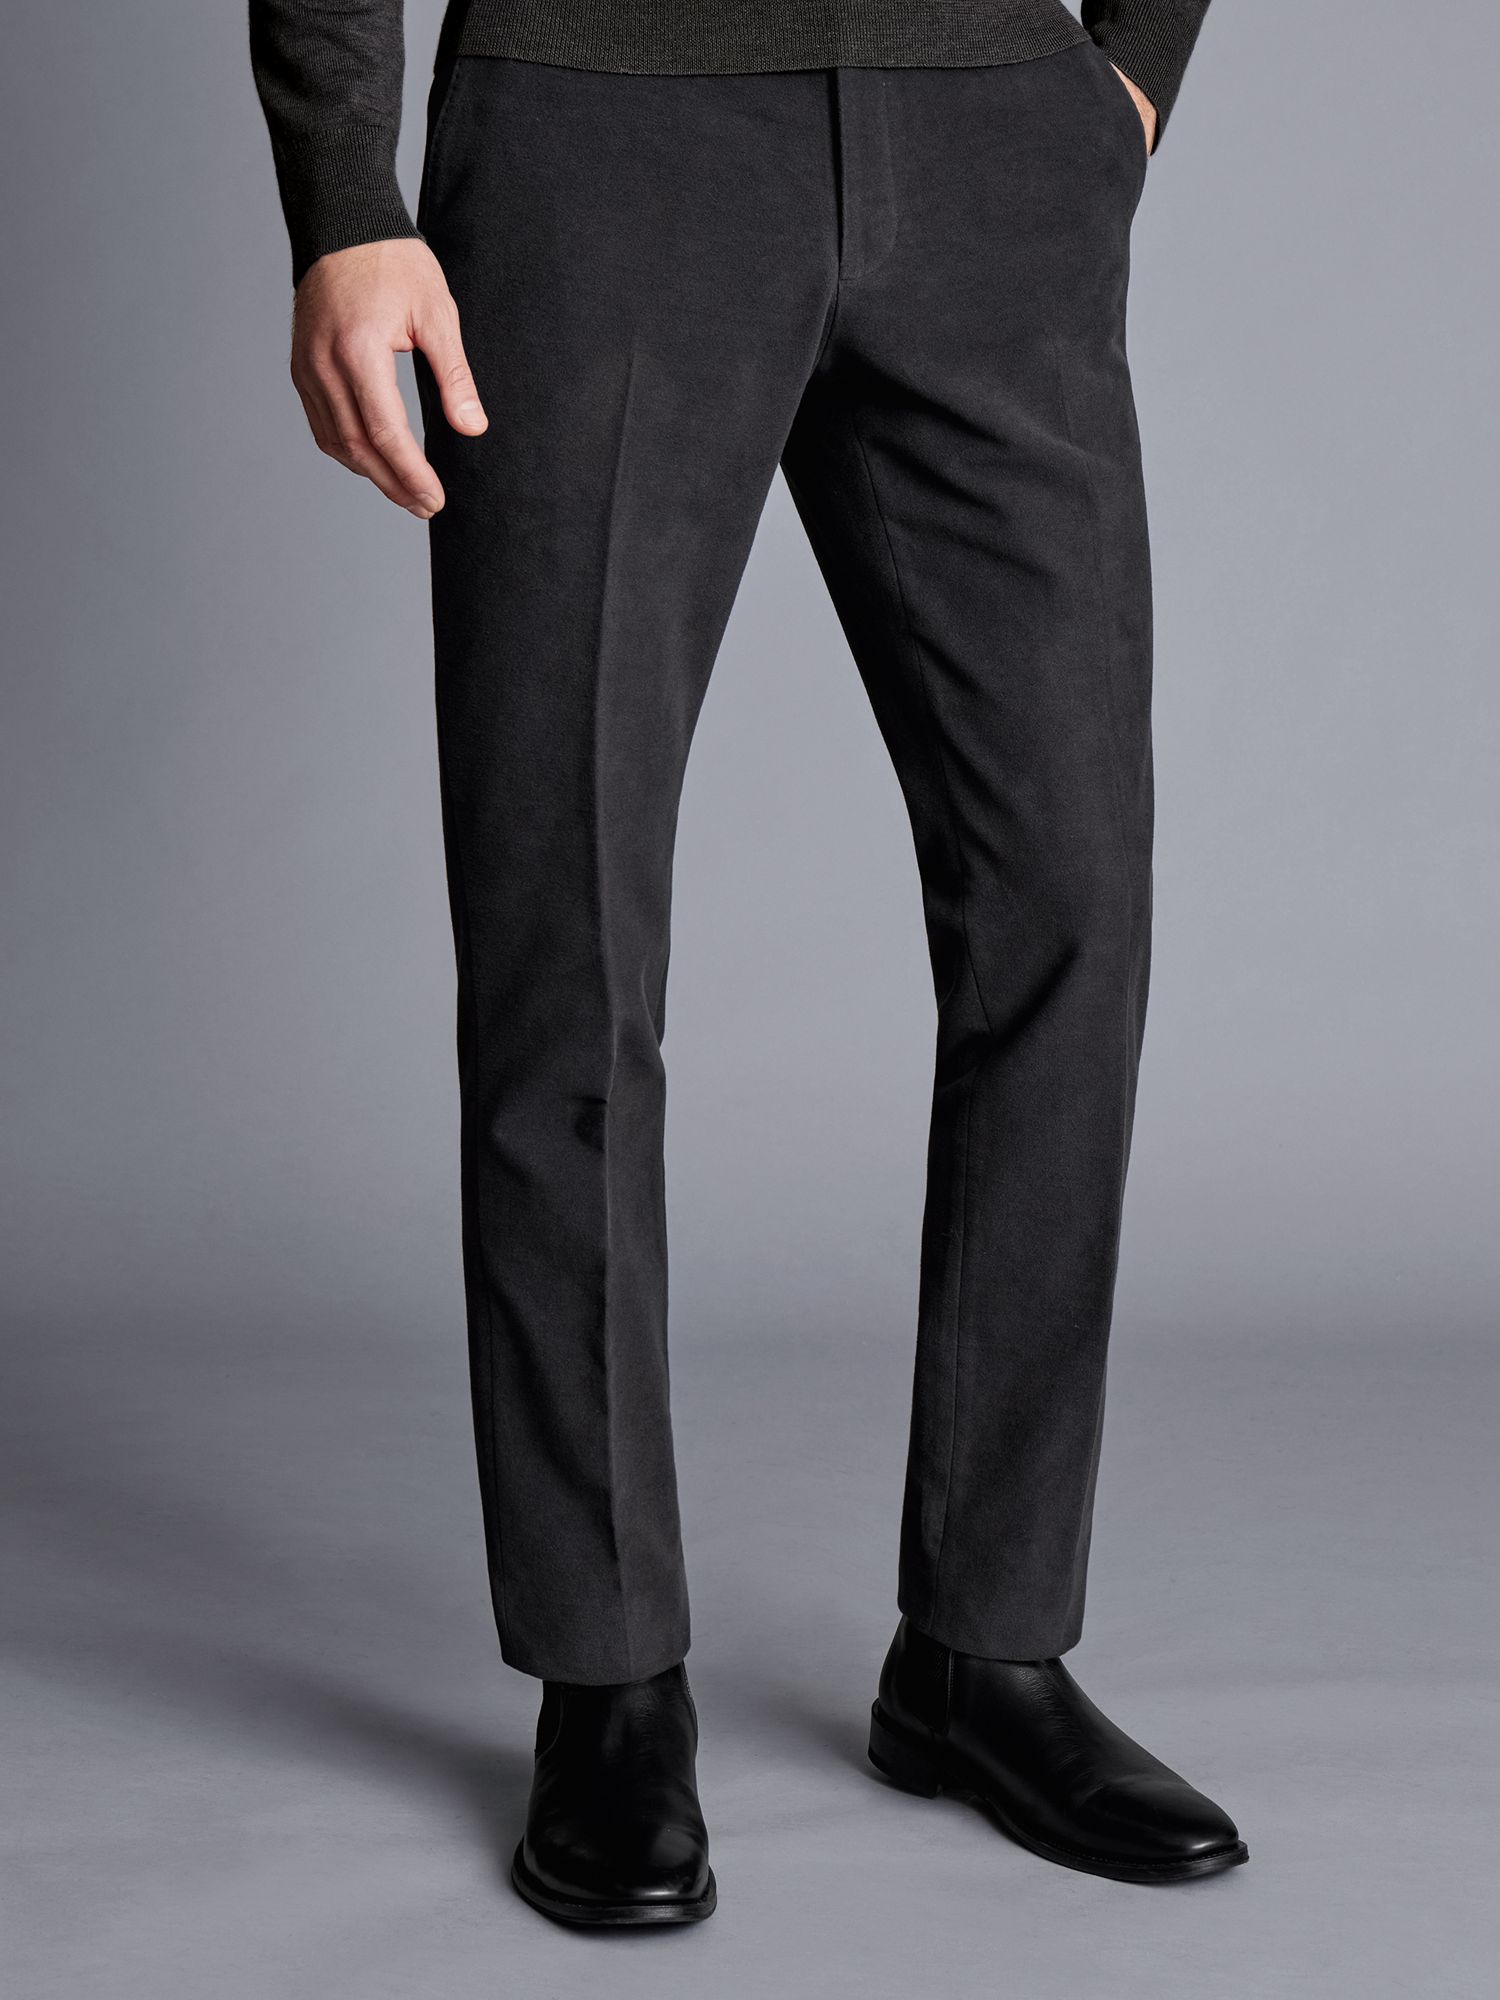 Charles Tyrwhitt Italian Moleskin Slim Fit Suit Trousers, Dark Grey at ...